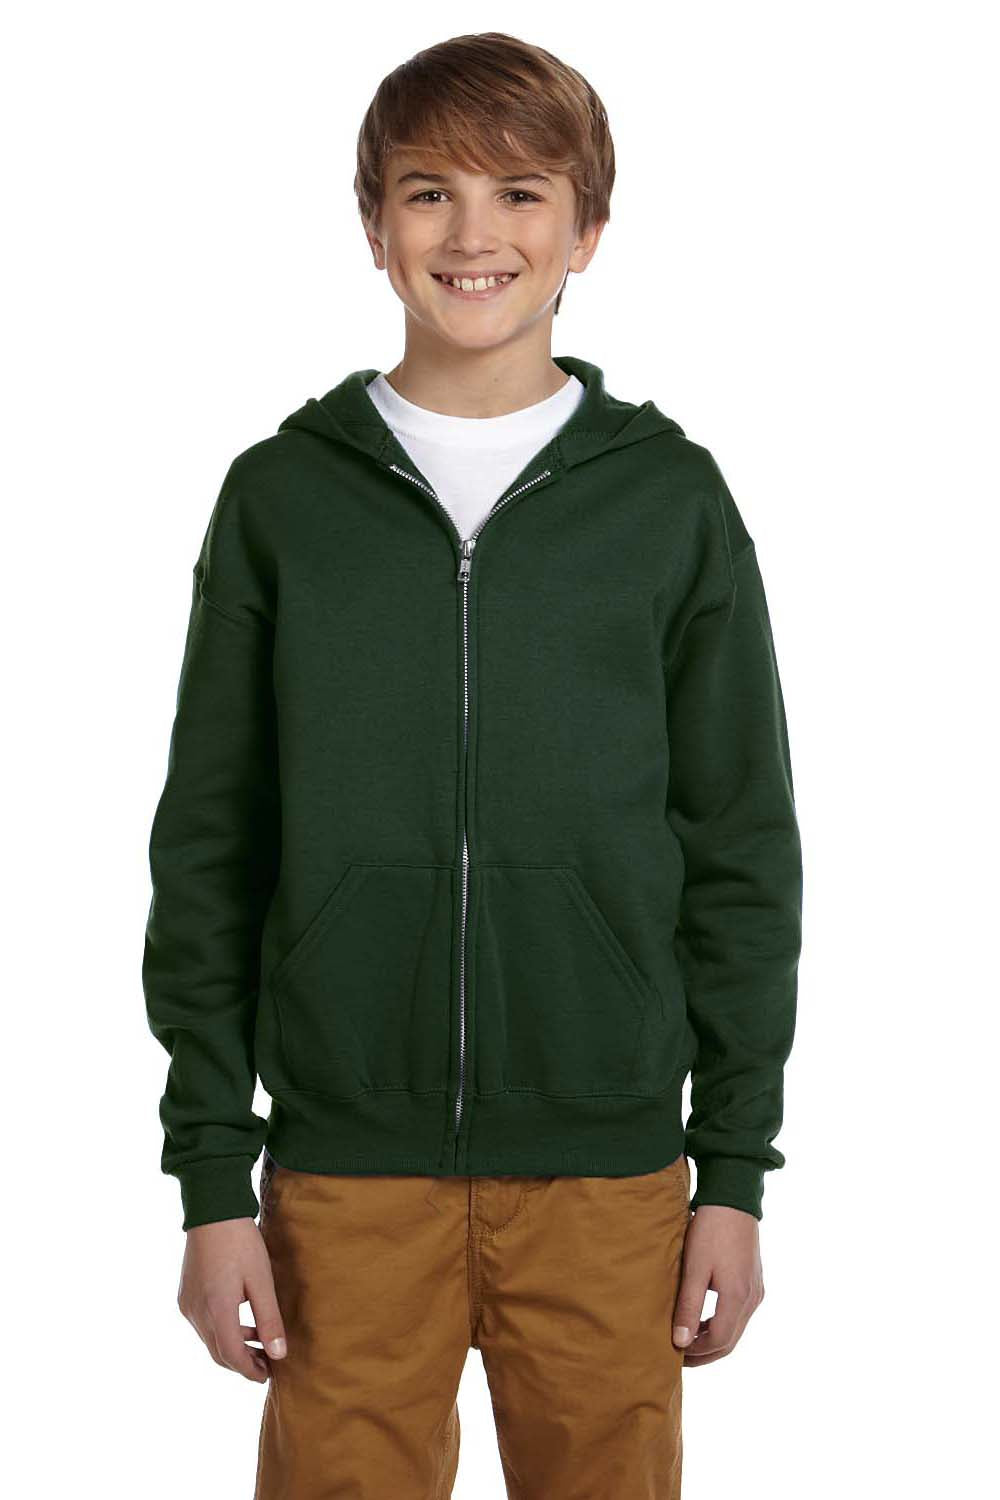 Jerzees 993B Youth NuBlend Fleece Full Zip Hooded Sweatshirt Hoodie Forest Green Front